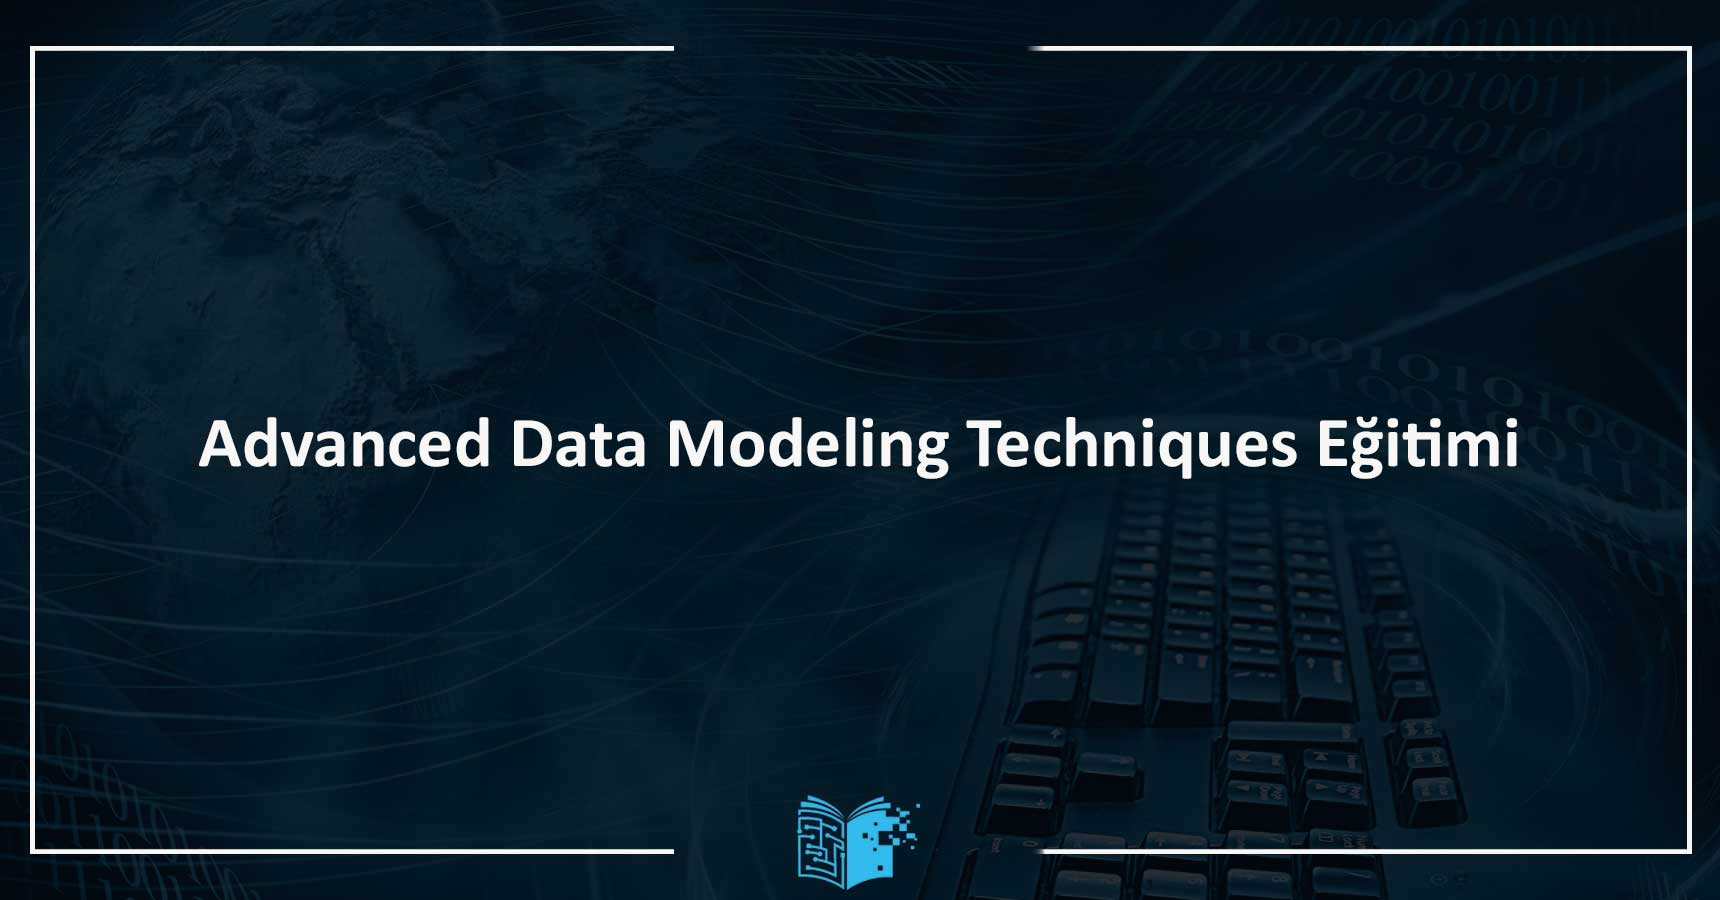 Advanced Data Modeling Techniques Eğitimi